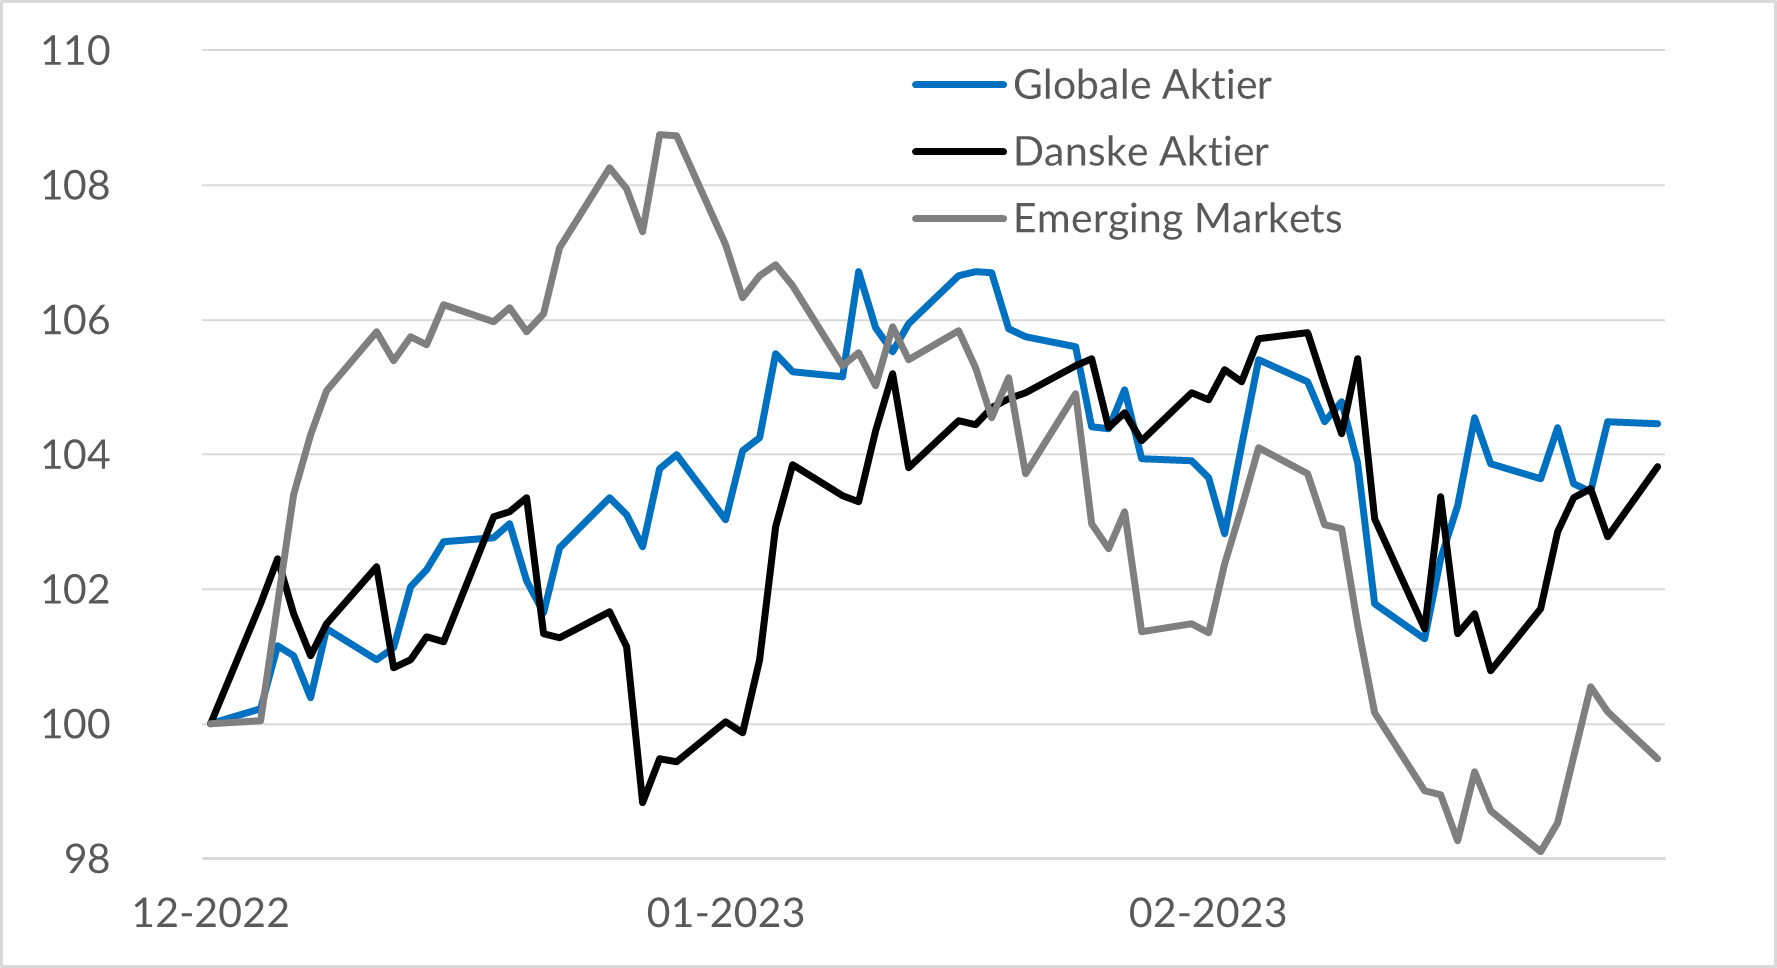 Aktiekurser: globale danske og emerging markets